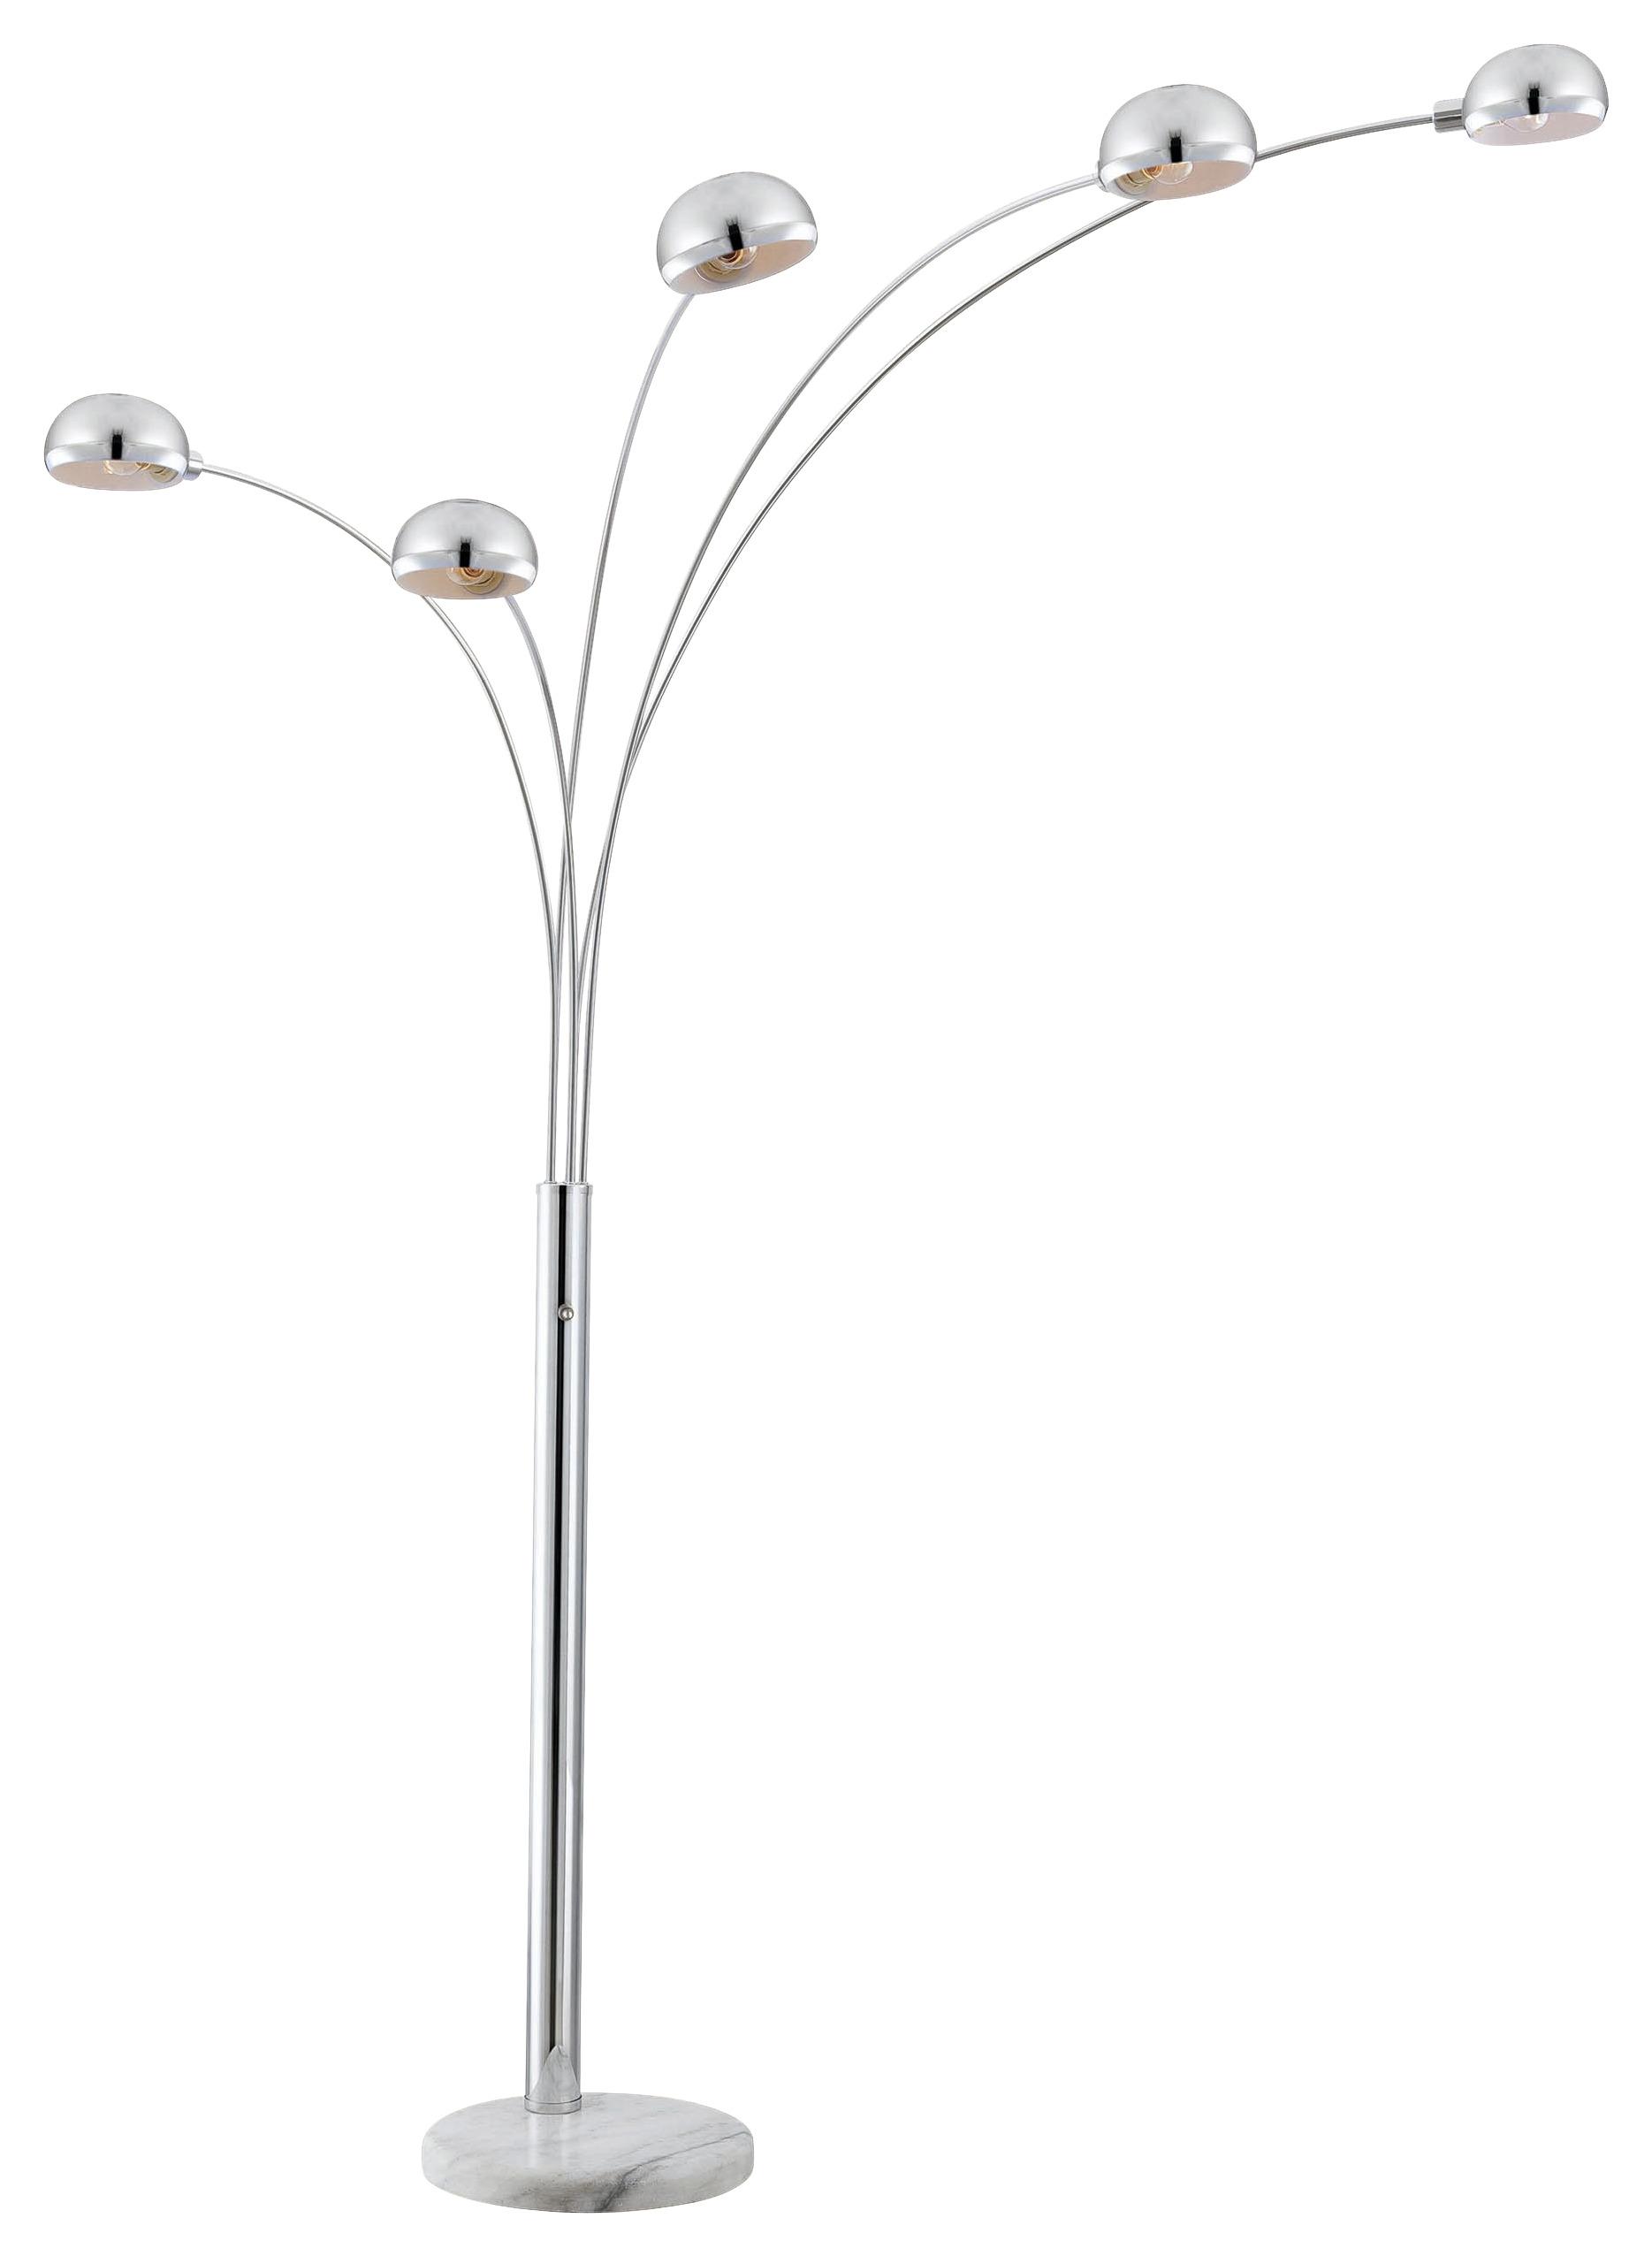 Stojací Lampa Turle V: 200cm, 40 Watt - barvy chromu, Moderní, kov (130/200cm) - Modern Living